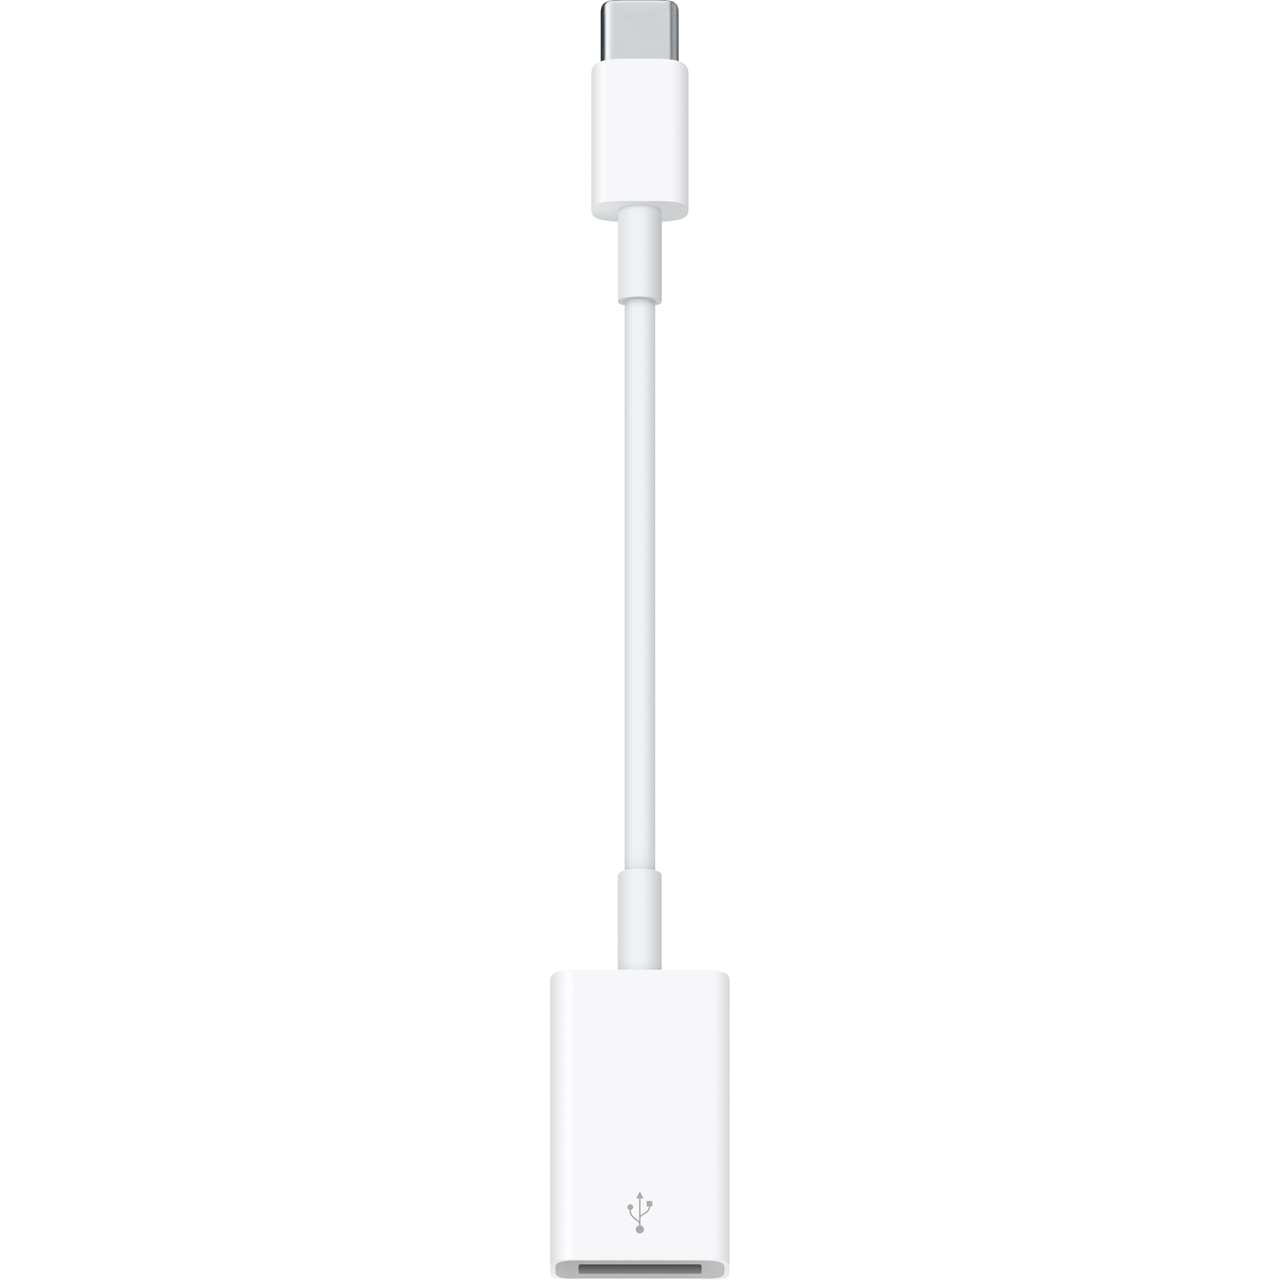 Apple USB-C To Standard USB Adaptor Review